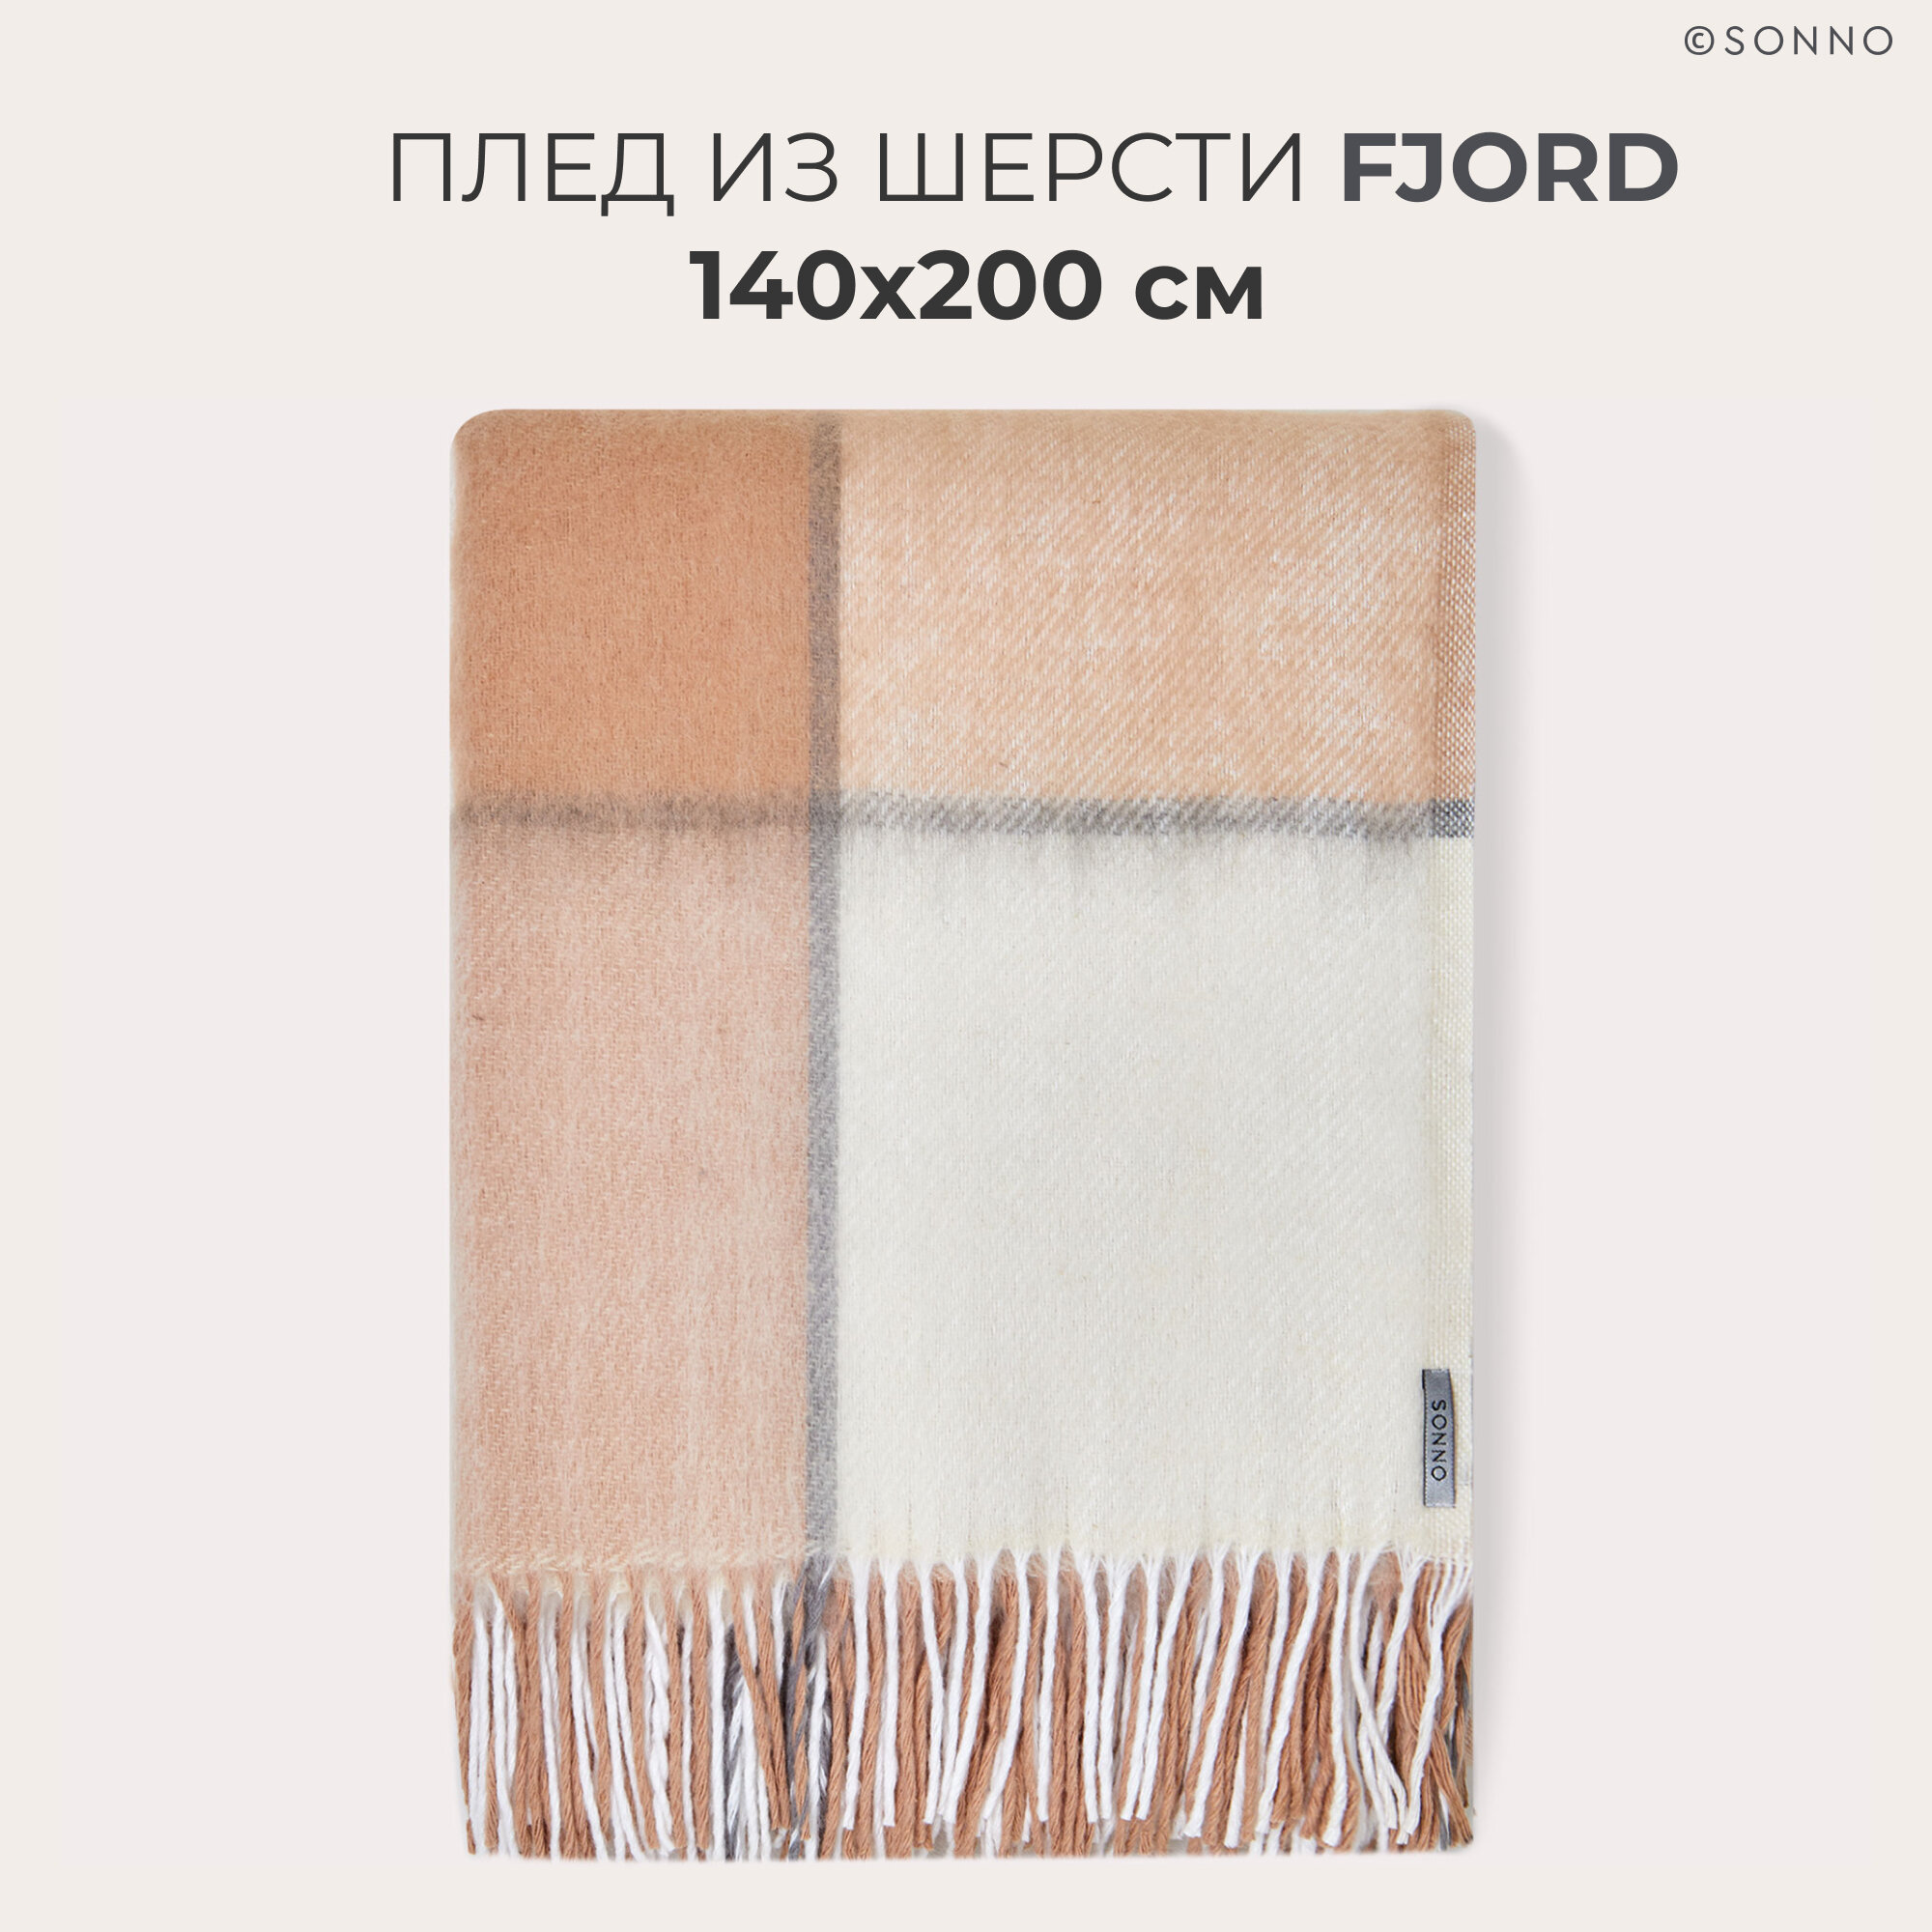 Плед из шерсти мериноса SONNO FJORD с бахромой, цвет серо-бежевый, 350 гр/кв. м, 140х200 см